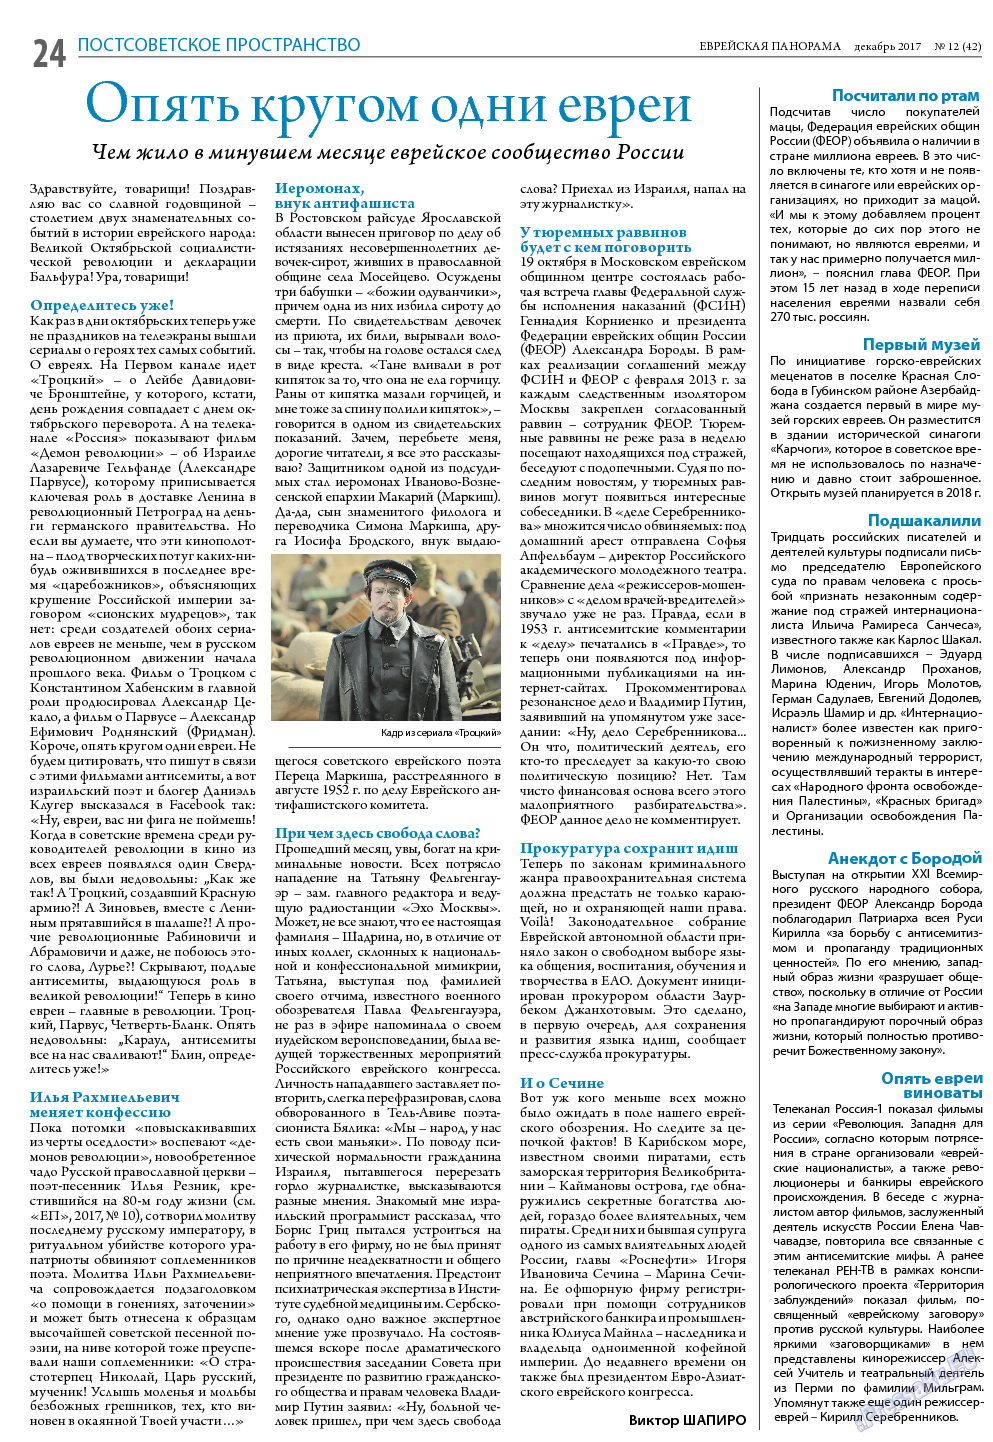 Еврейская панорама, газета. 2017 №12 стр.24